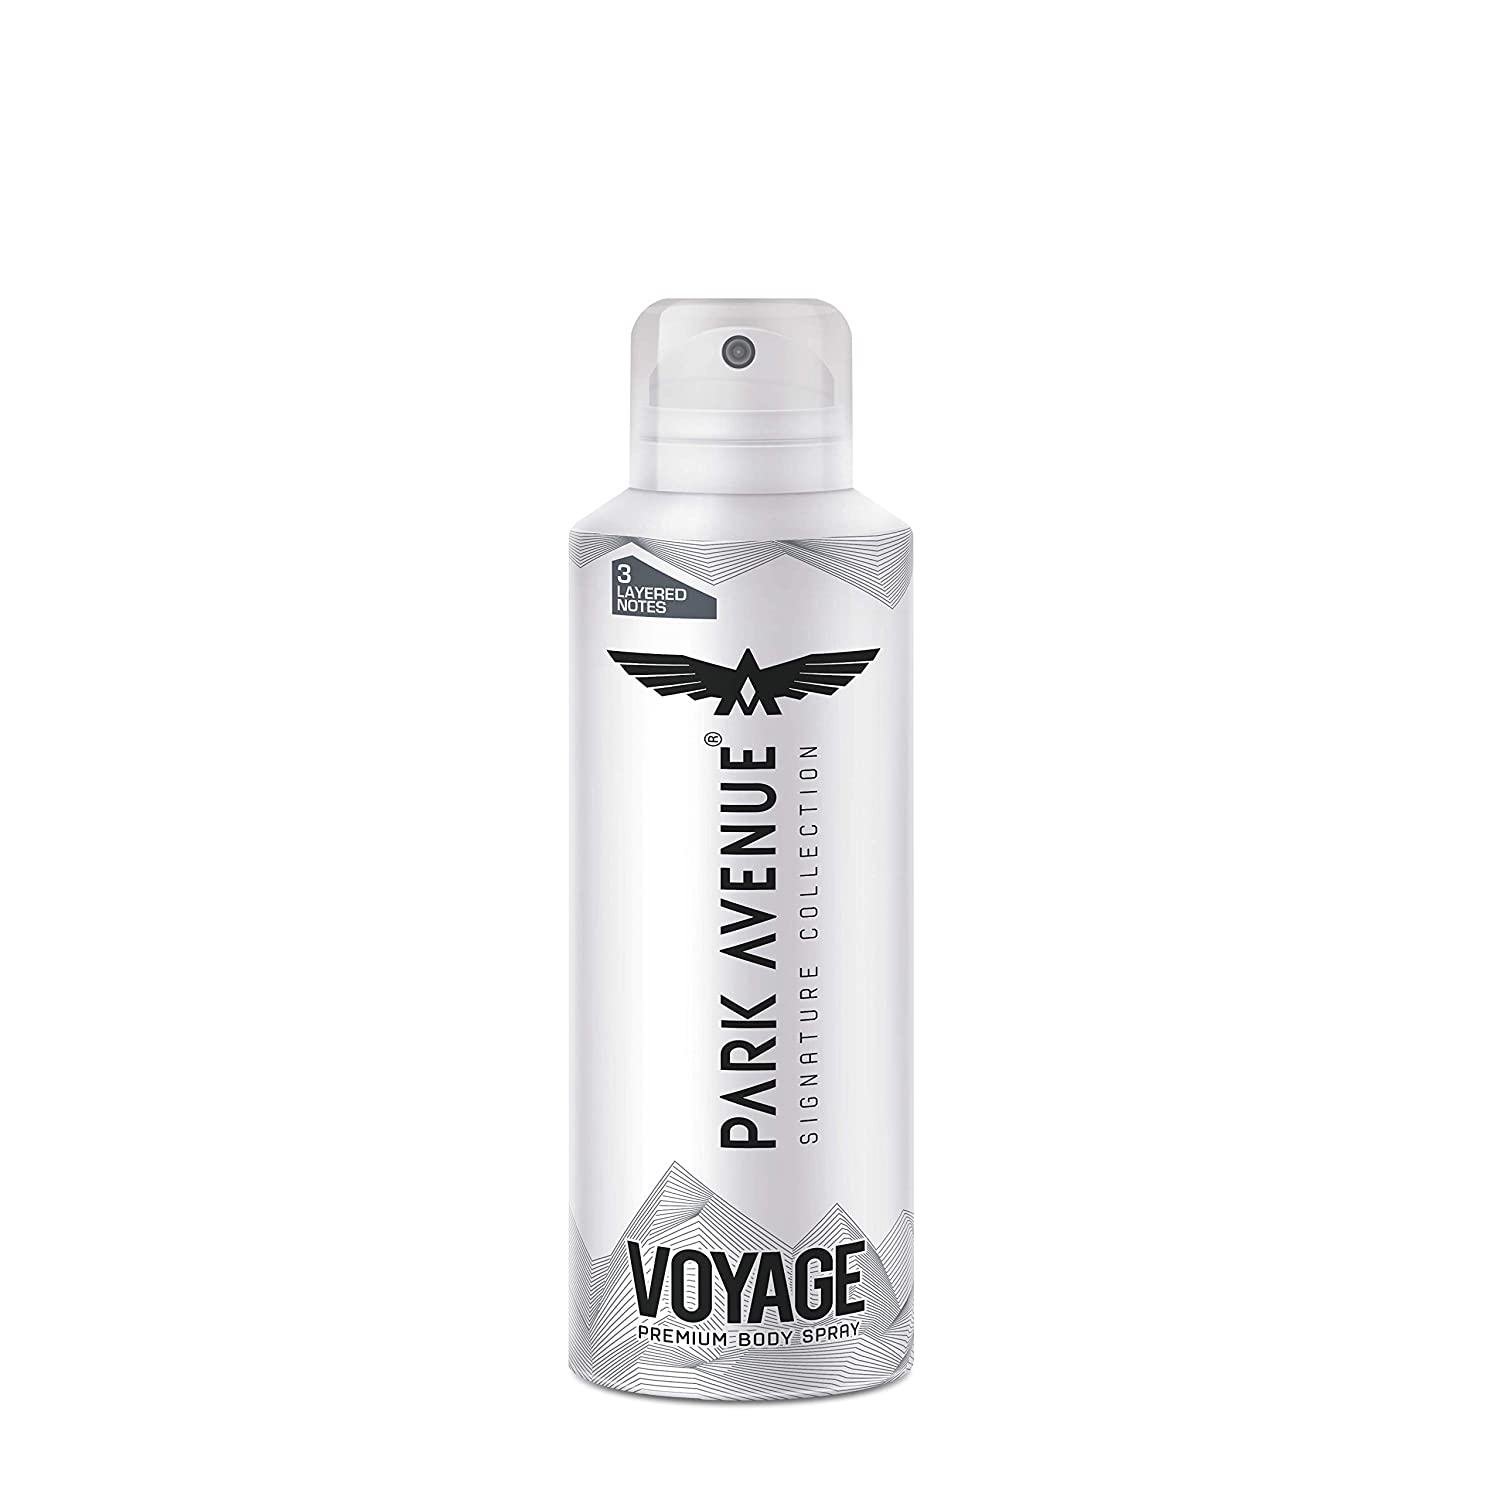 Park Avenue Voyage Body Spray 150ml